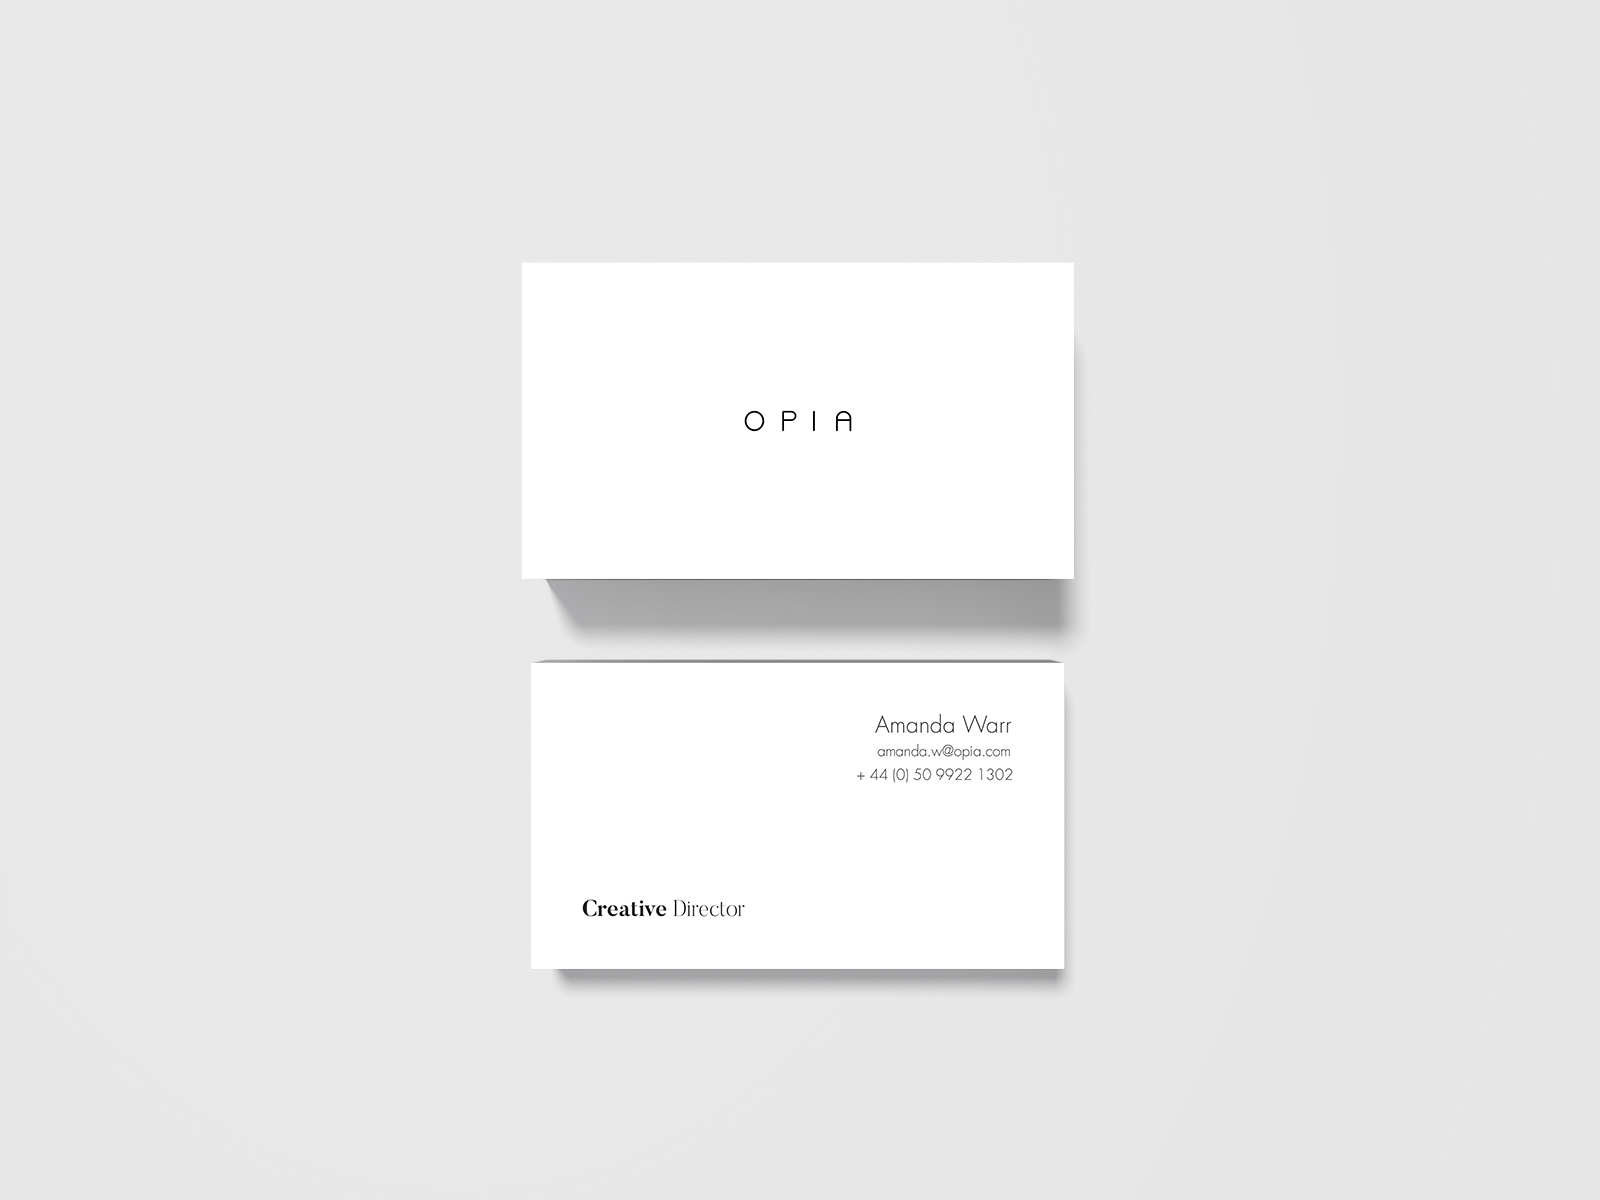 opia-mockup-business-cards.jpg